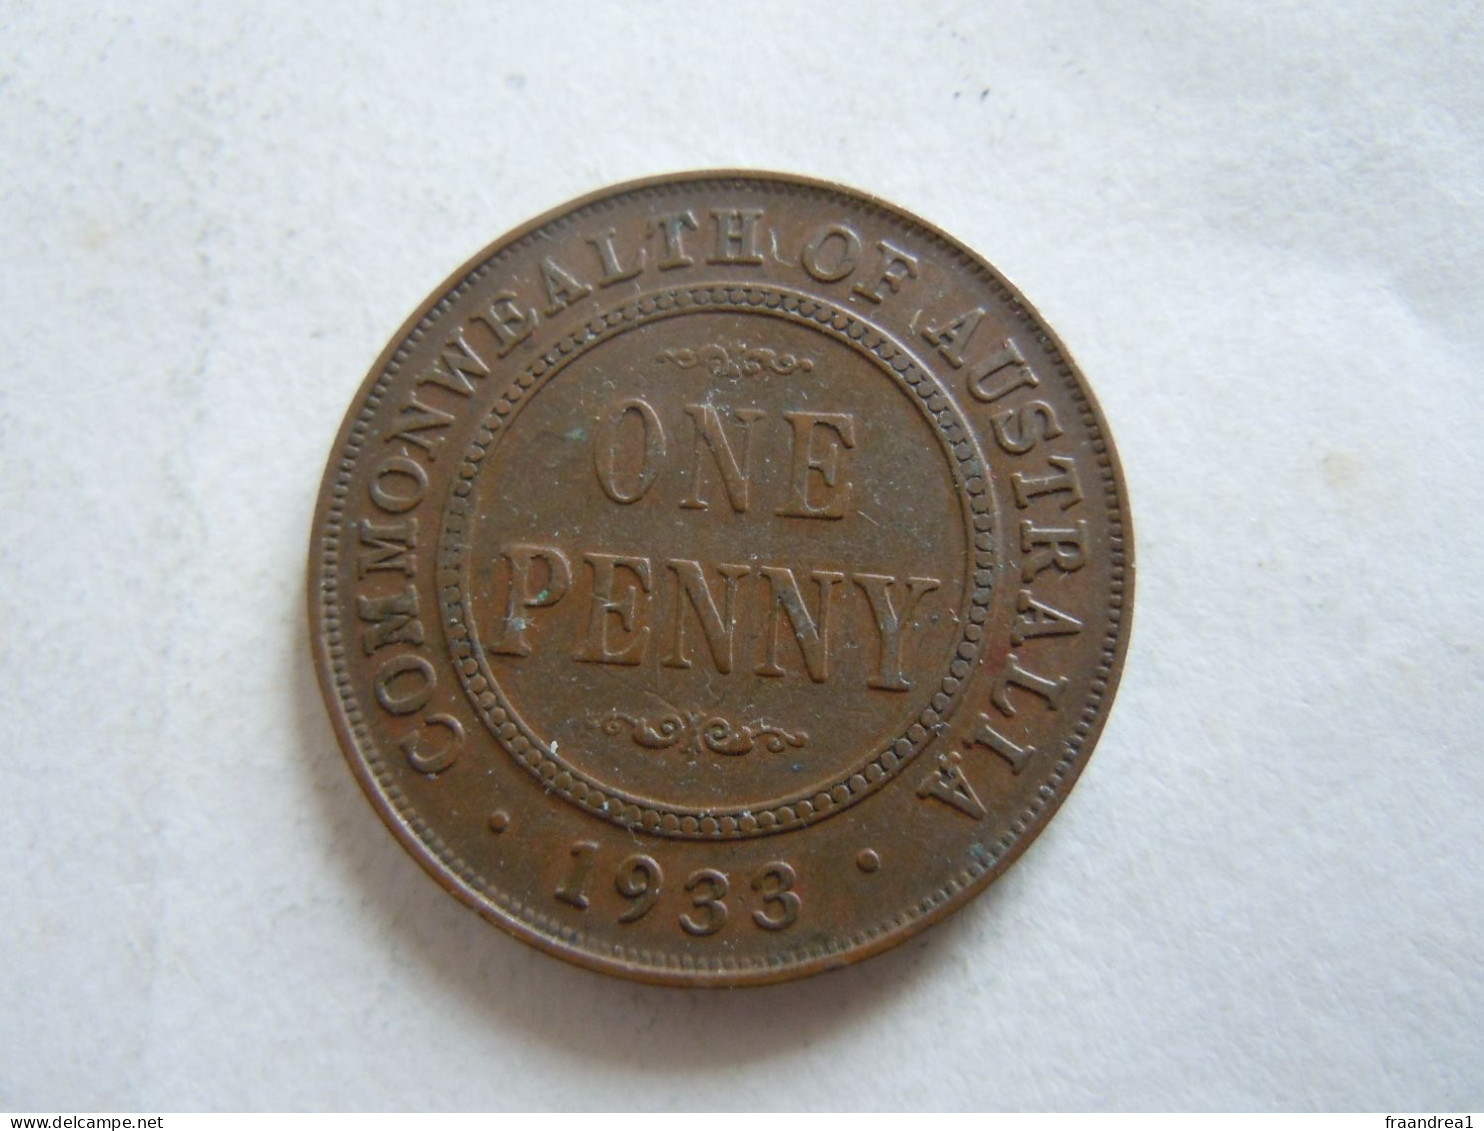 1933 AUSTRALIA ONE PENNY - Penny